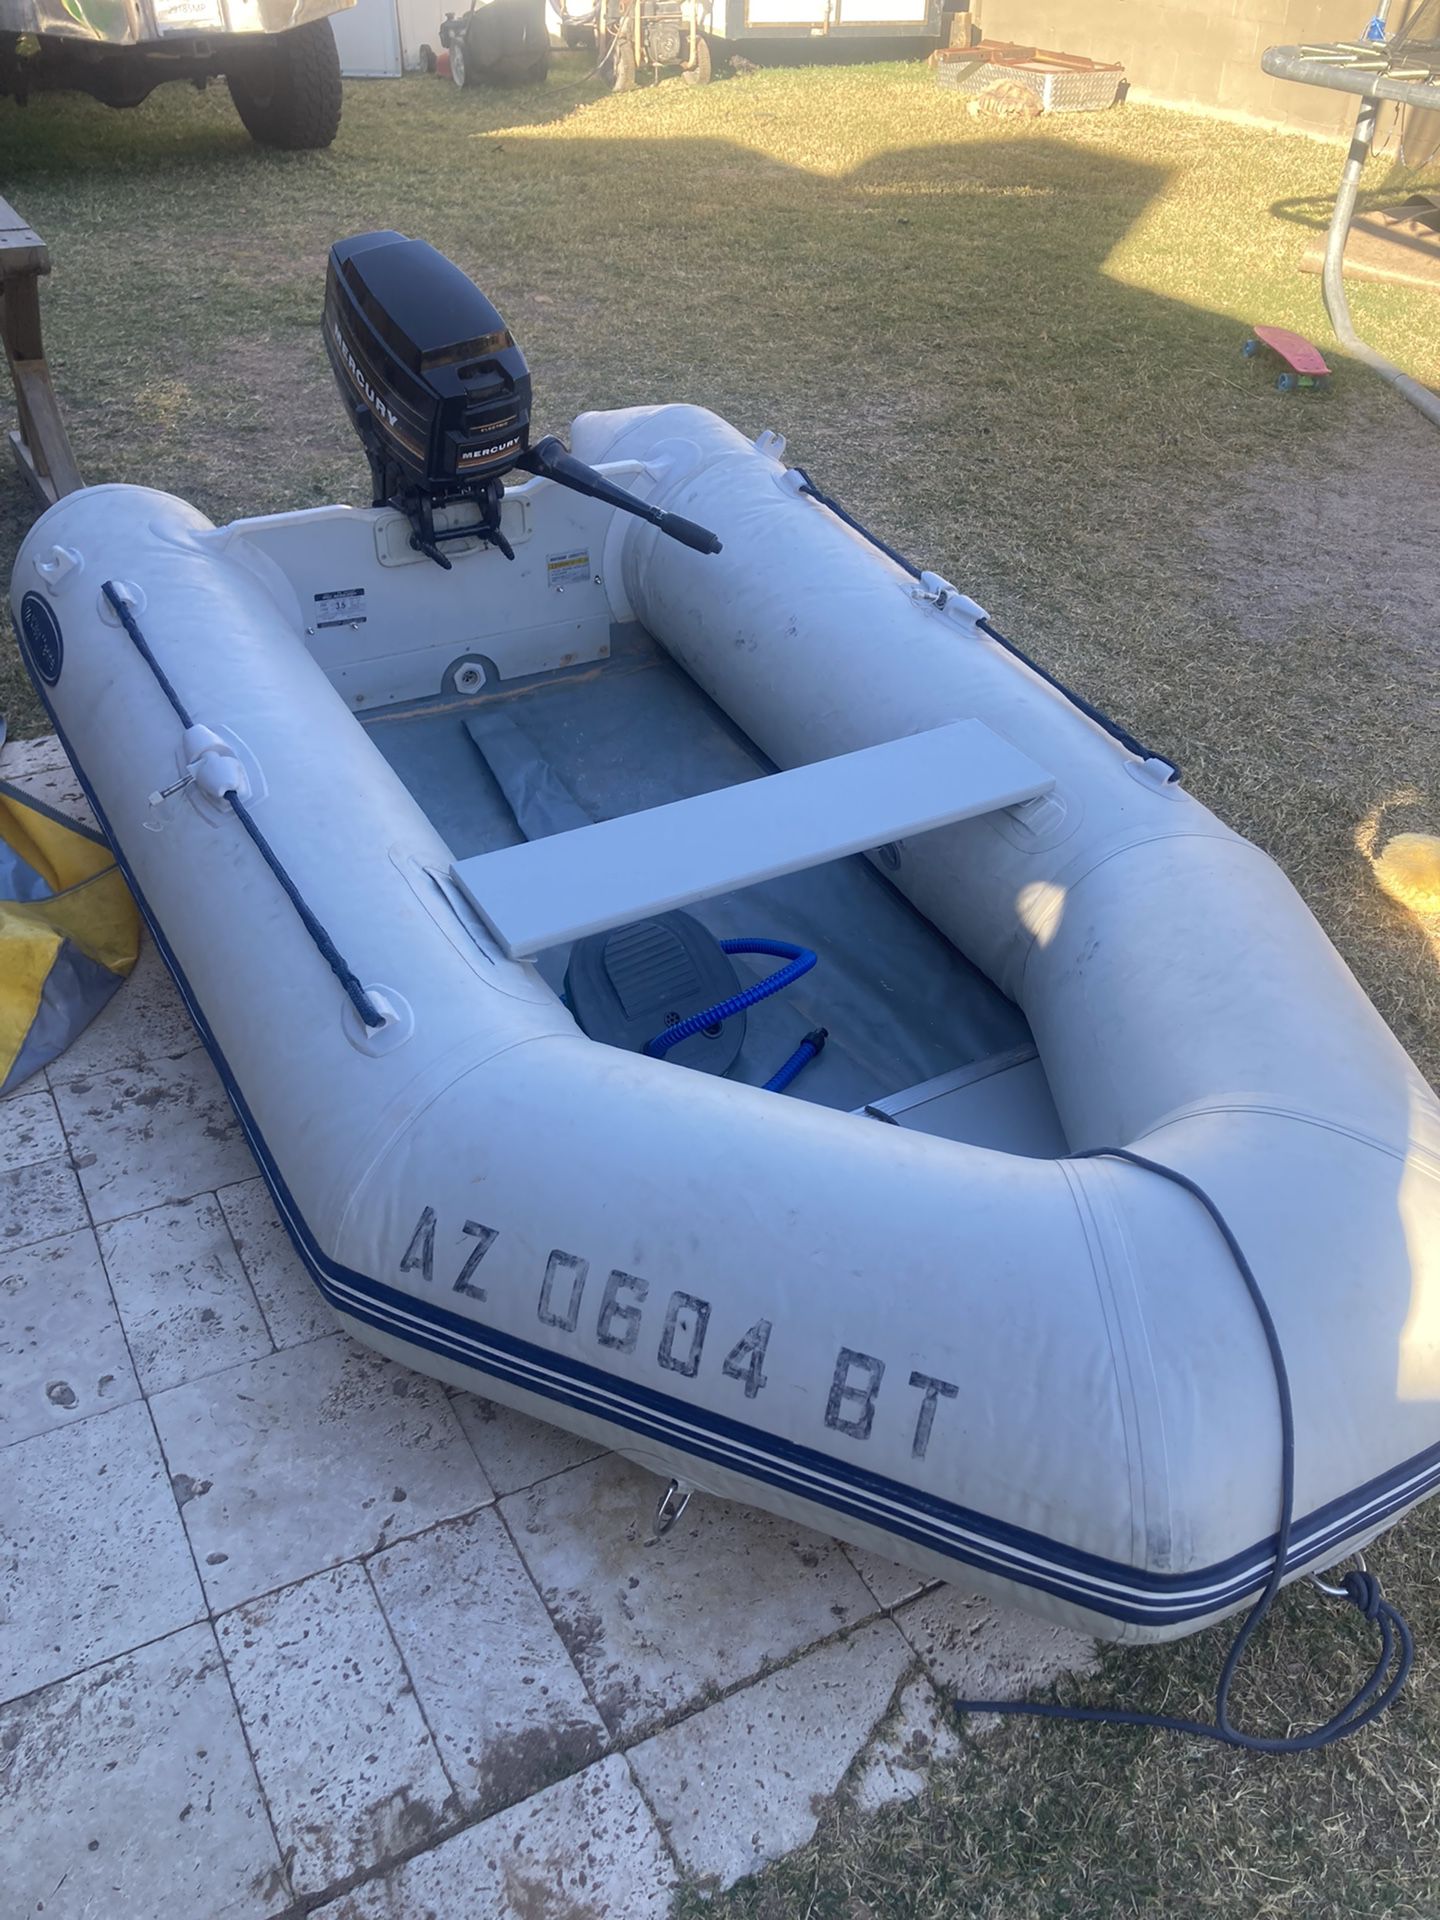 West Marine (zodiac) Inflatable Boat & Motor